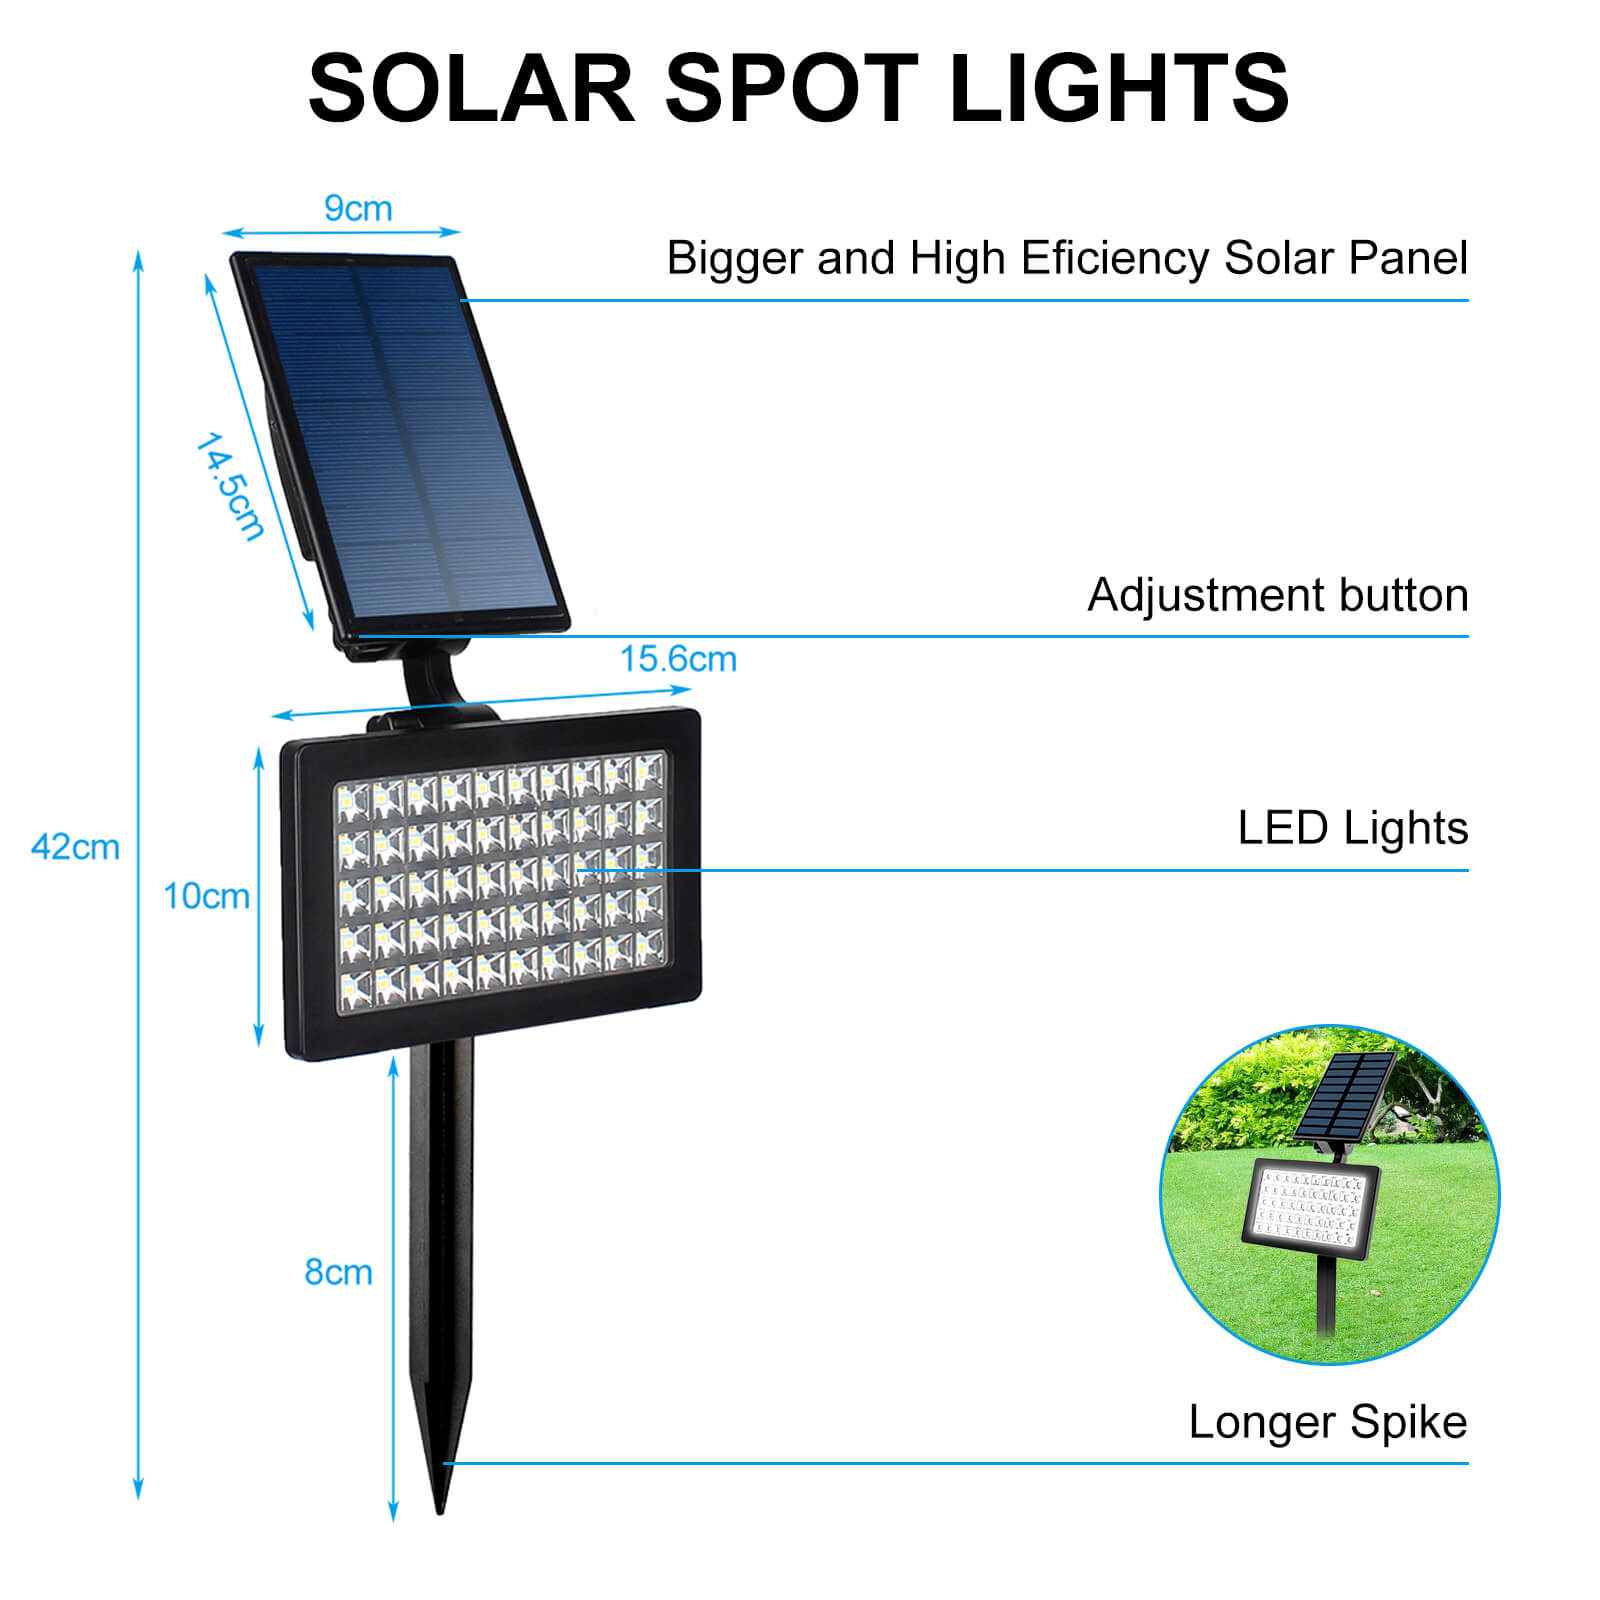 Solar spot lights have bigger and high effciency solar panel